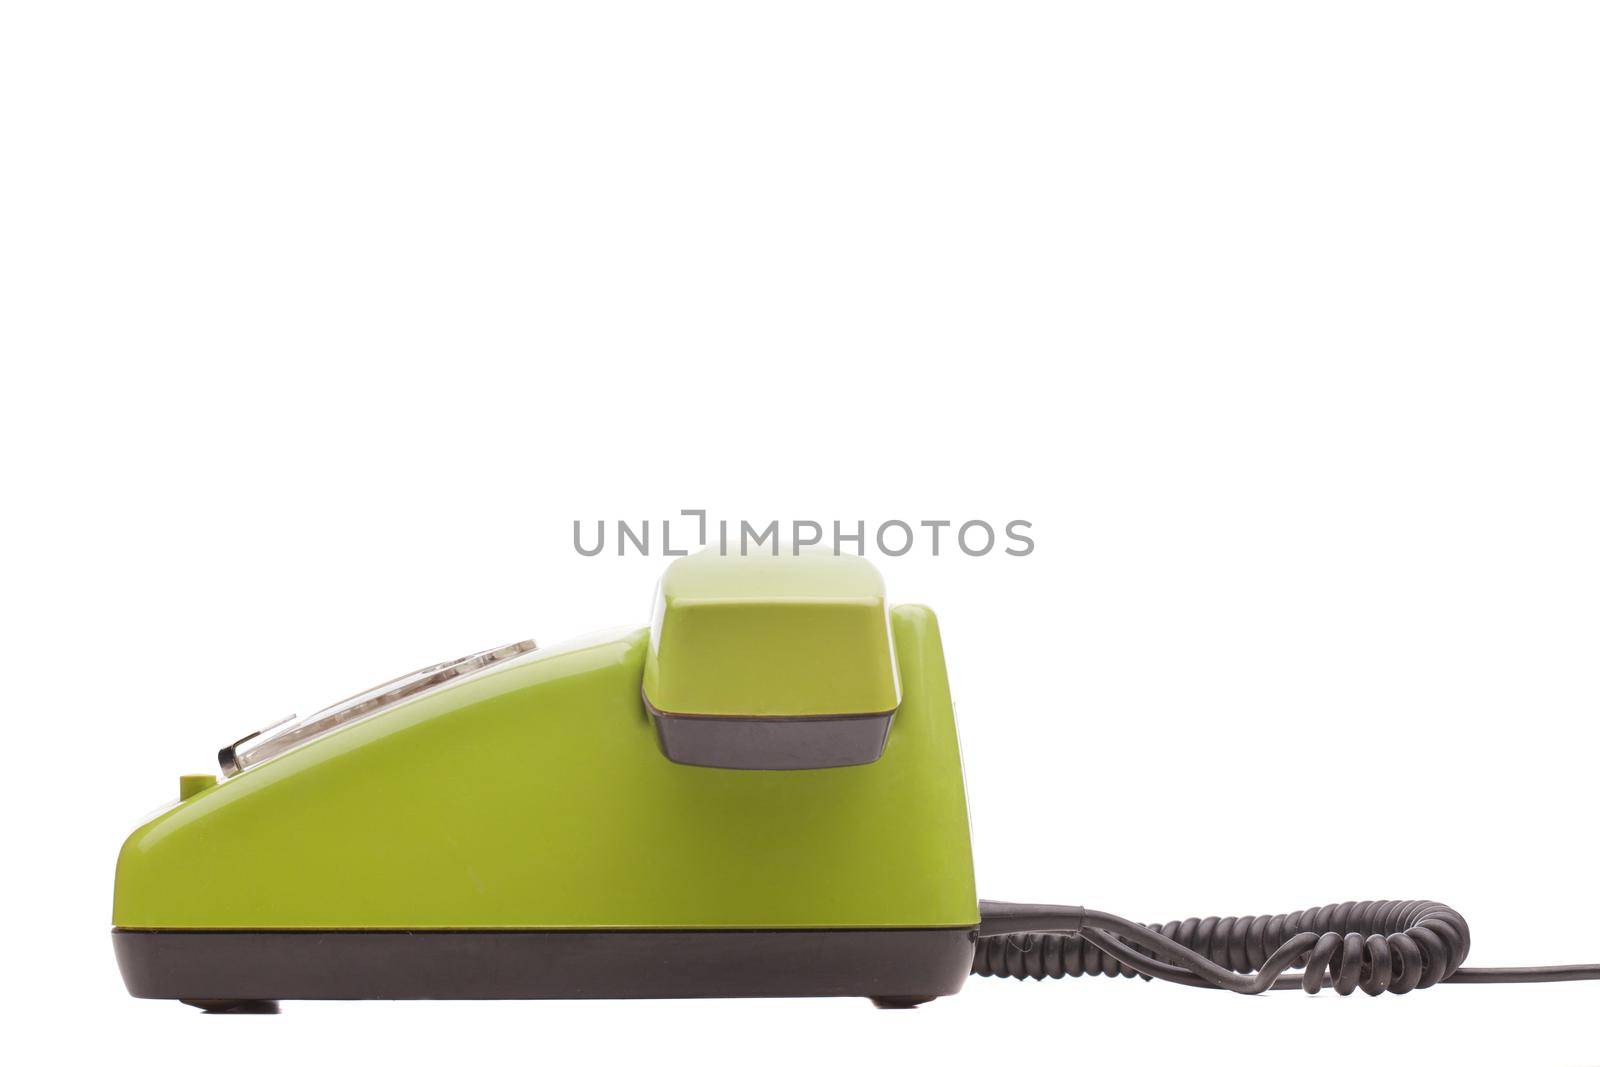 Green telephone retro style on white background. Vintage phone handset receiver by kokimk